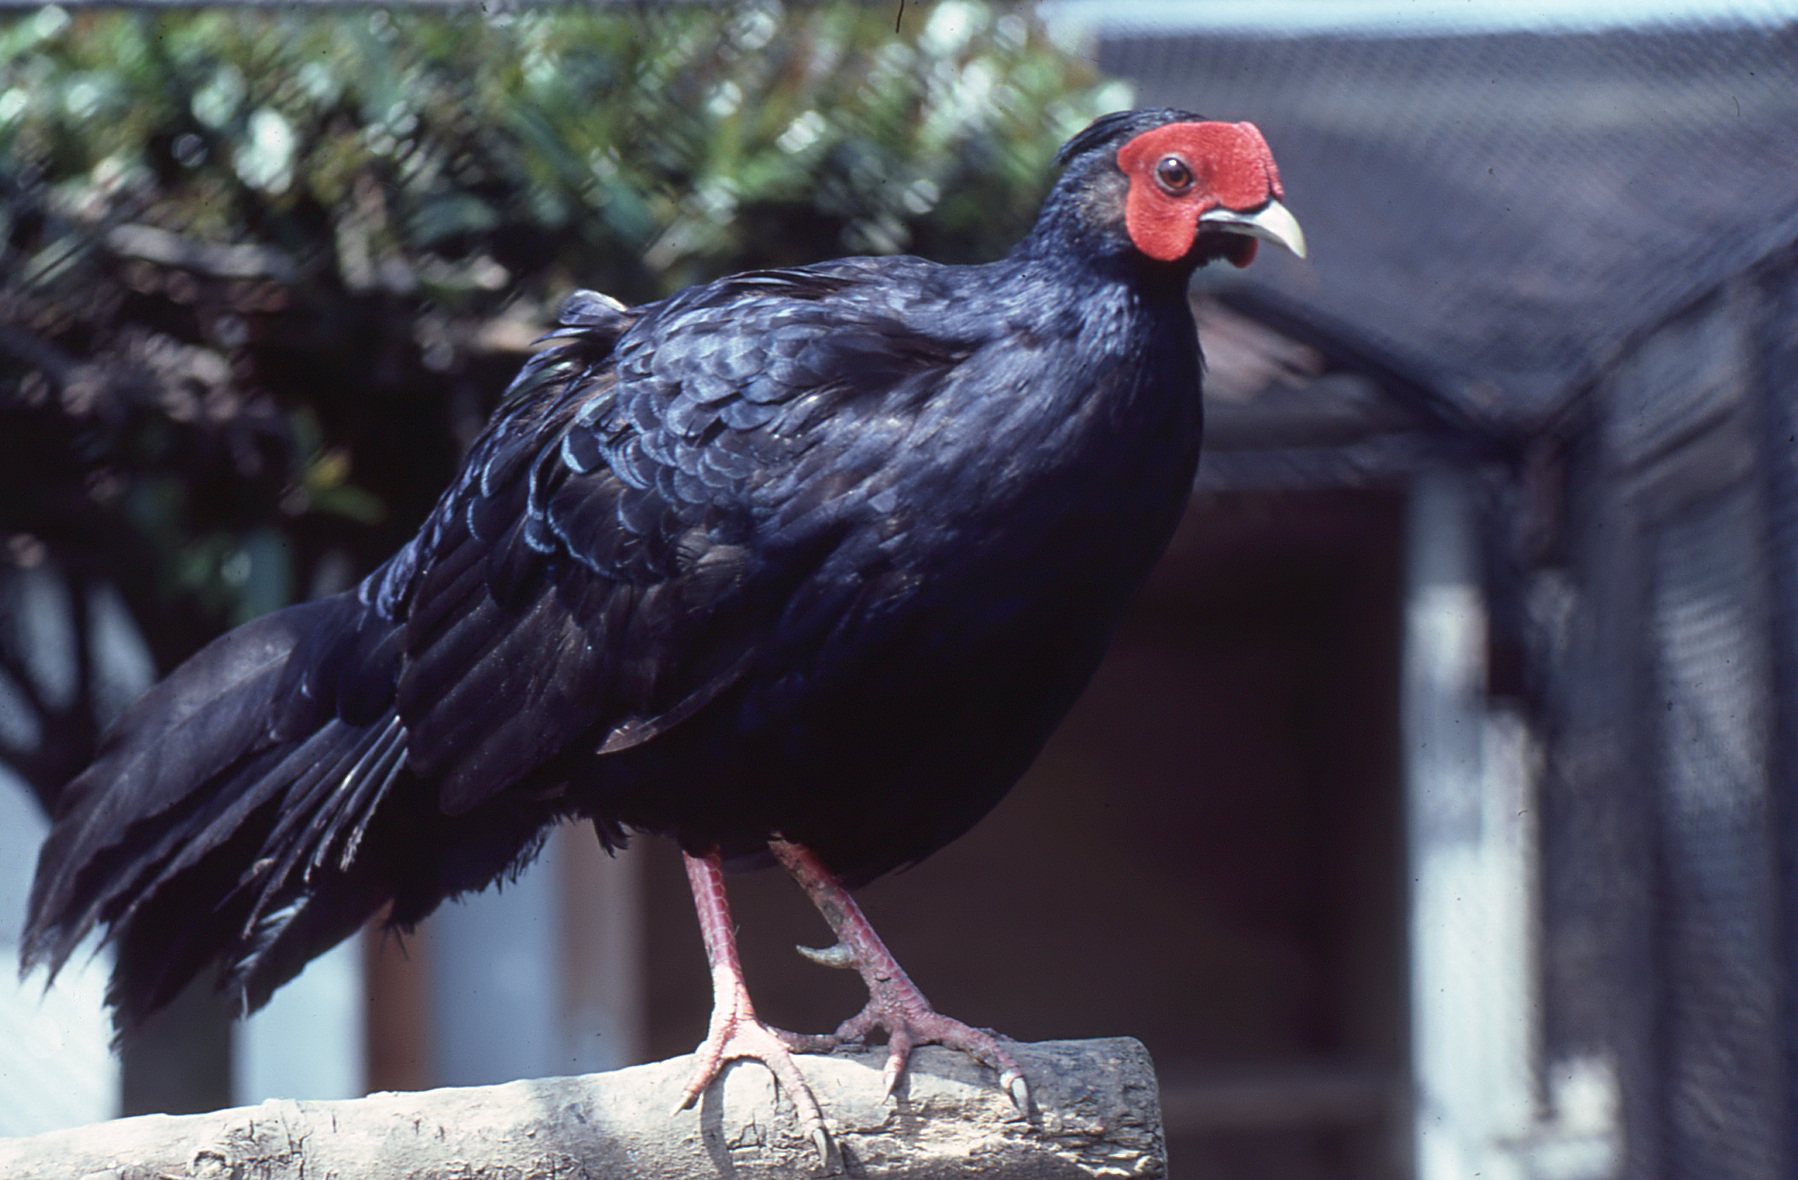 Image of Imperial Pheasant